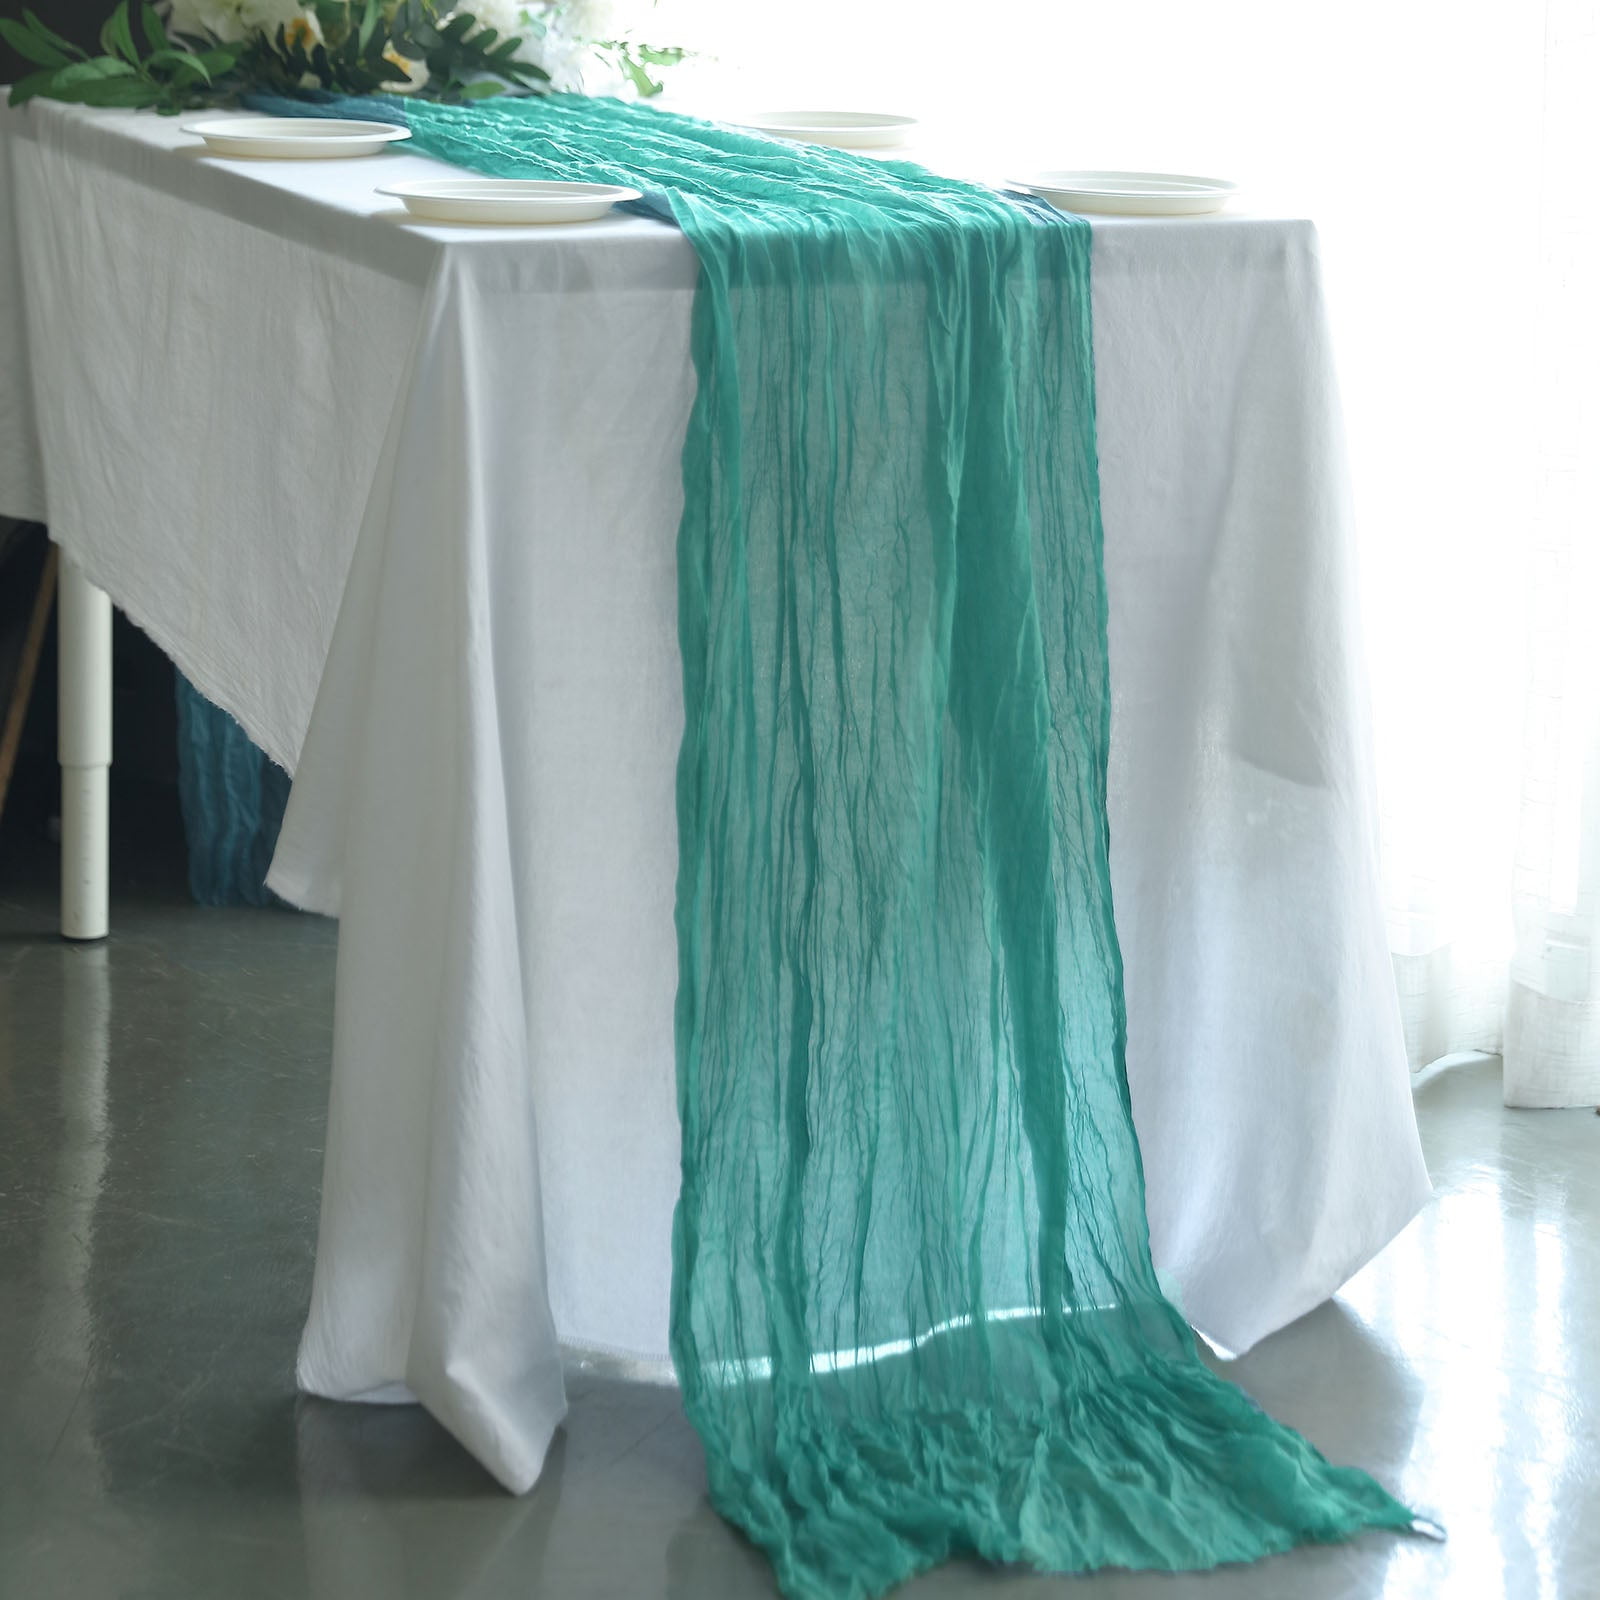 Efavormart 10FT Moss Green Cheesecloth Table Runner, Gauze Fabric